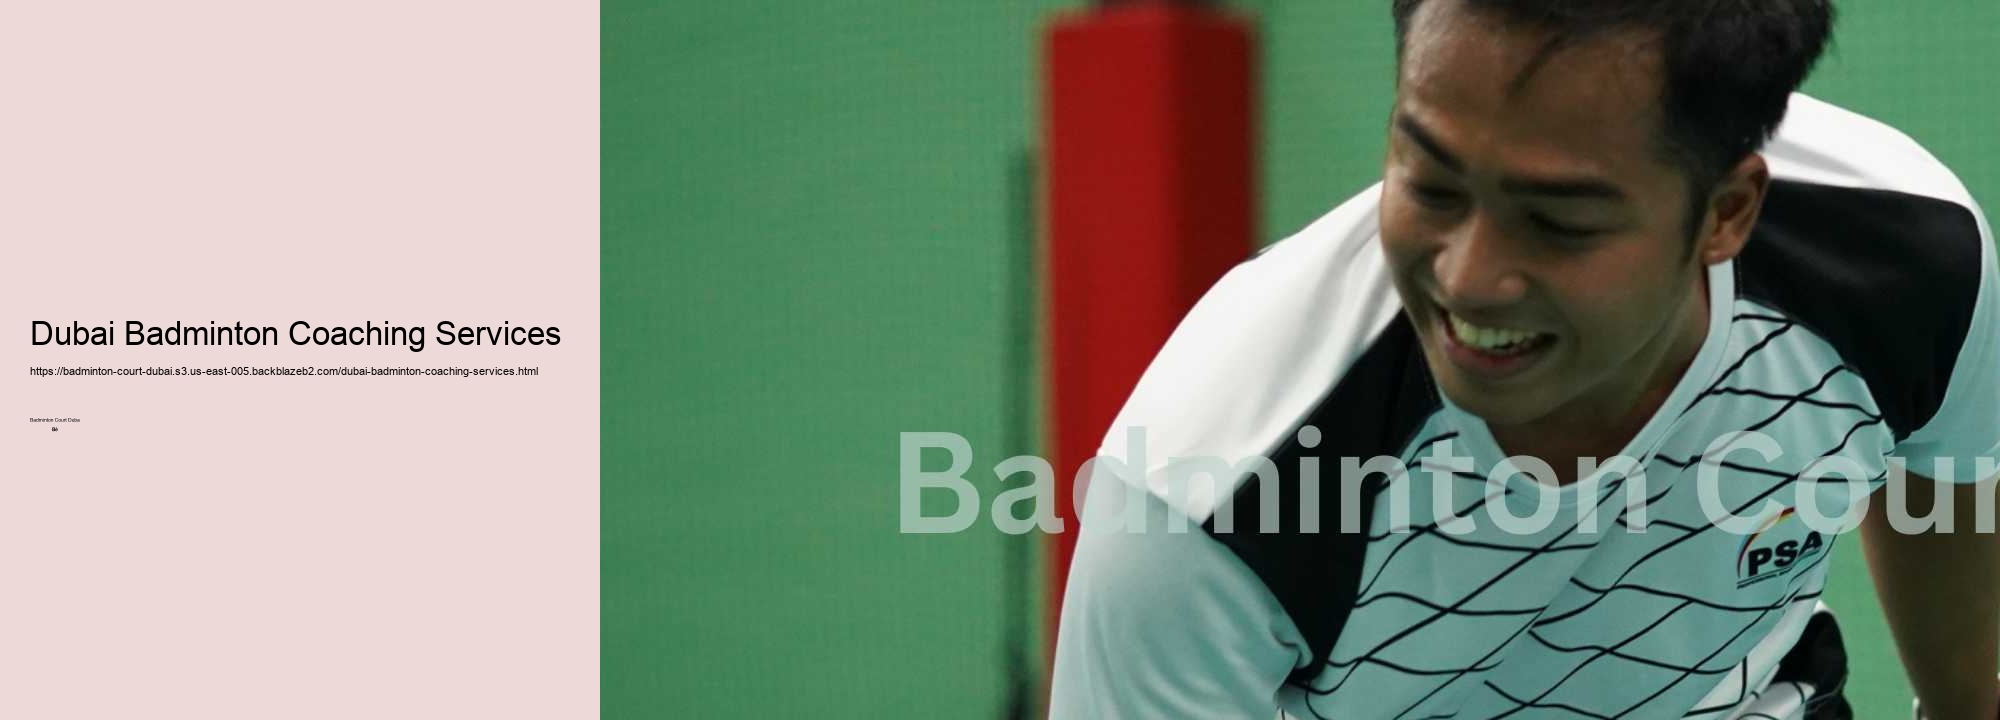 Dubai Badminton Coaching Services